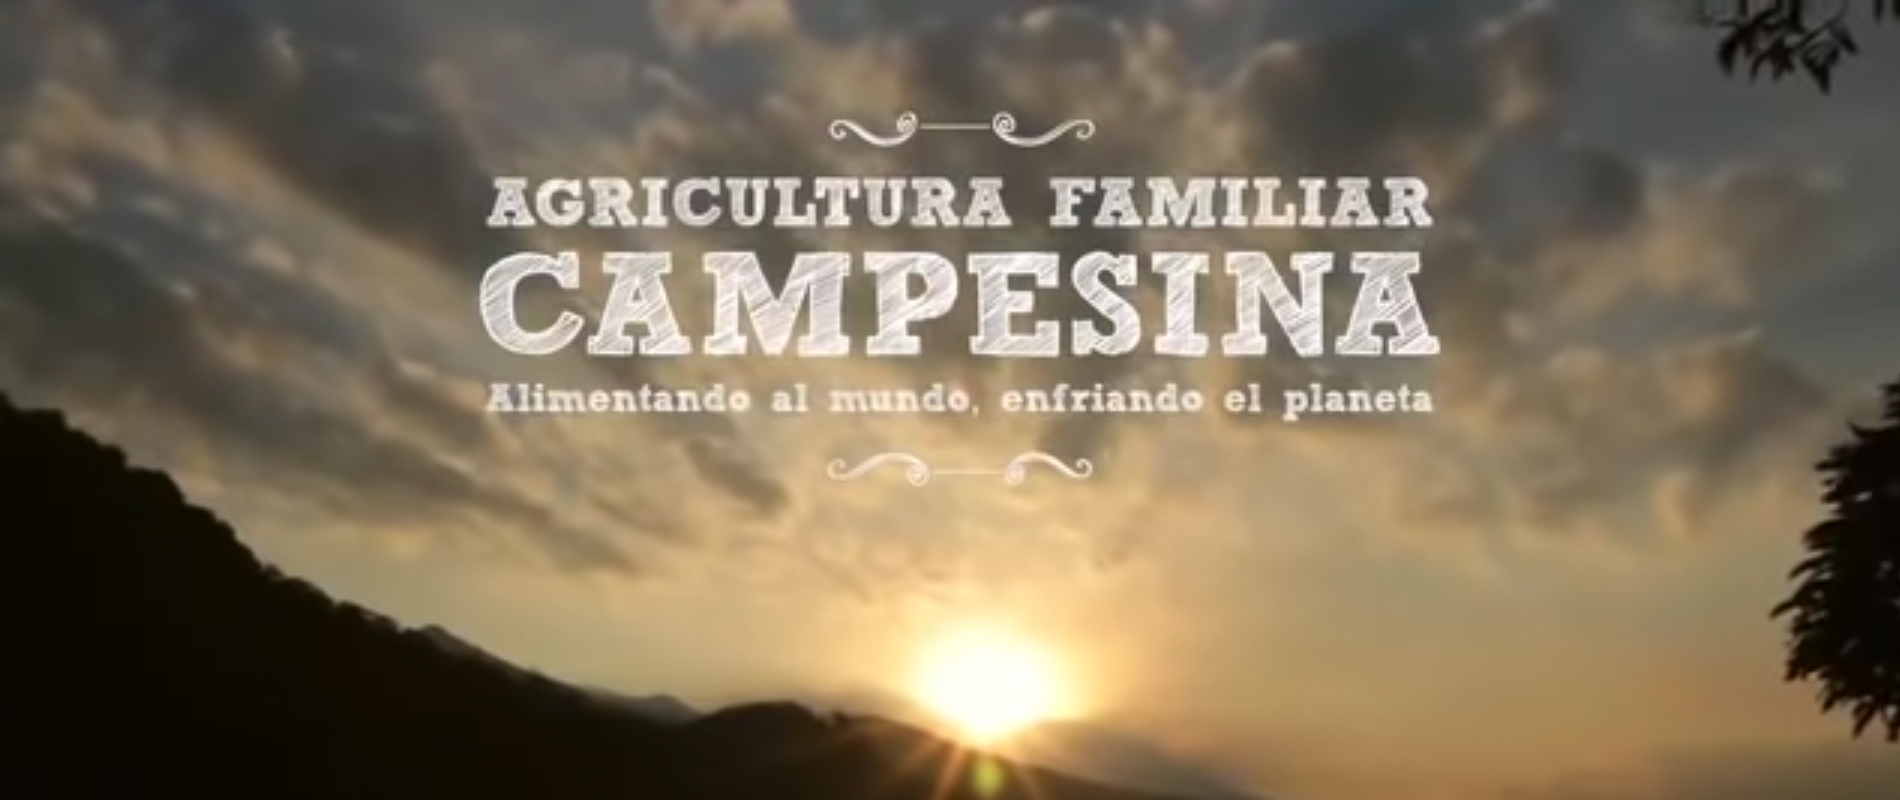 Agricultura Familiar Campesina alimentado al mundo, enfriando el planeta